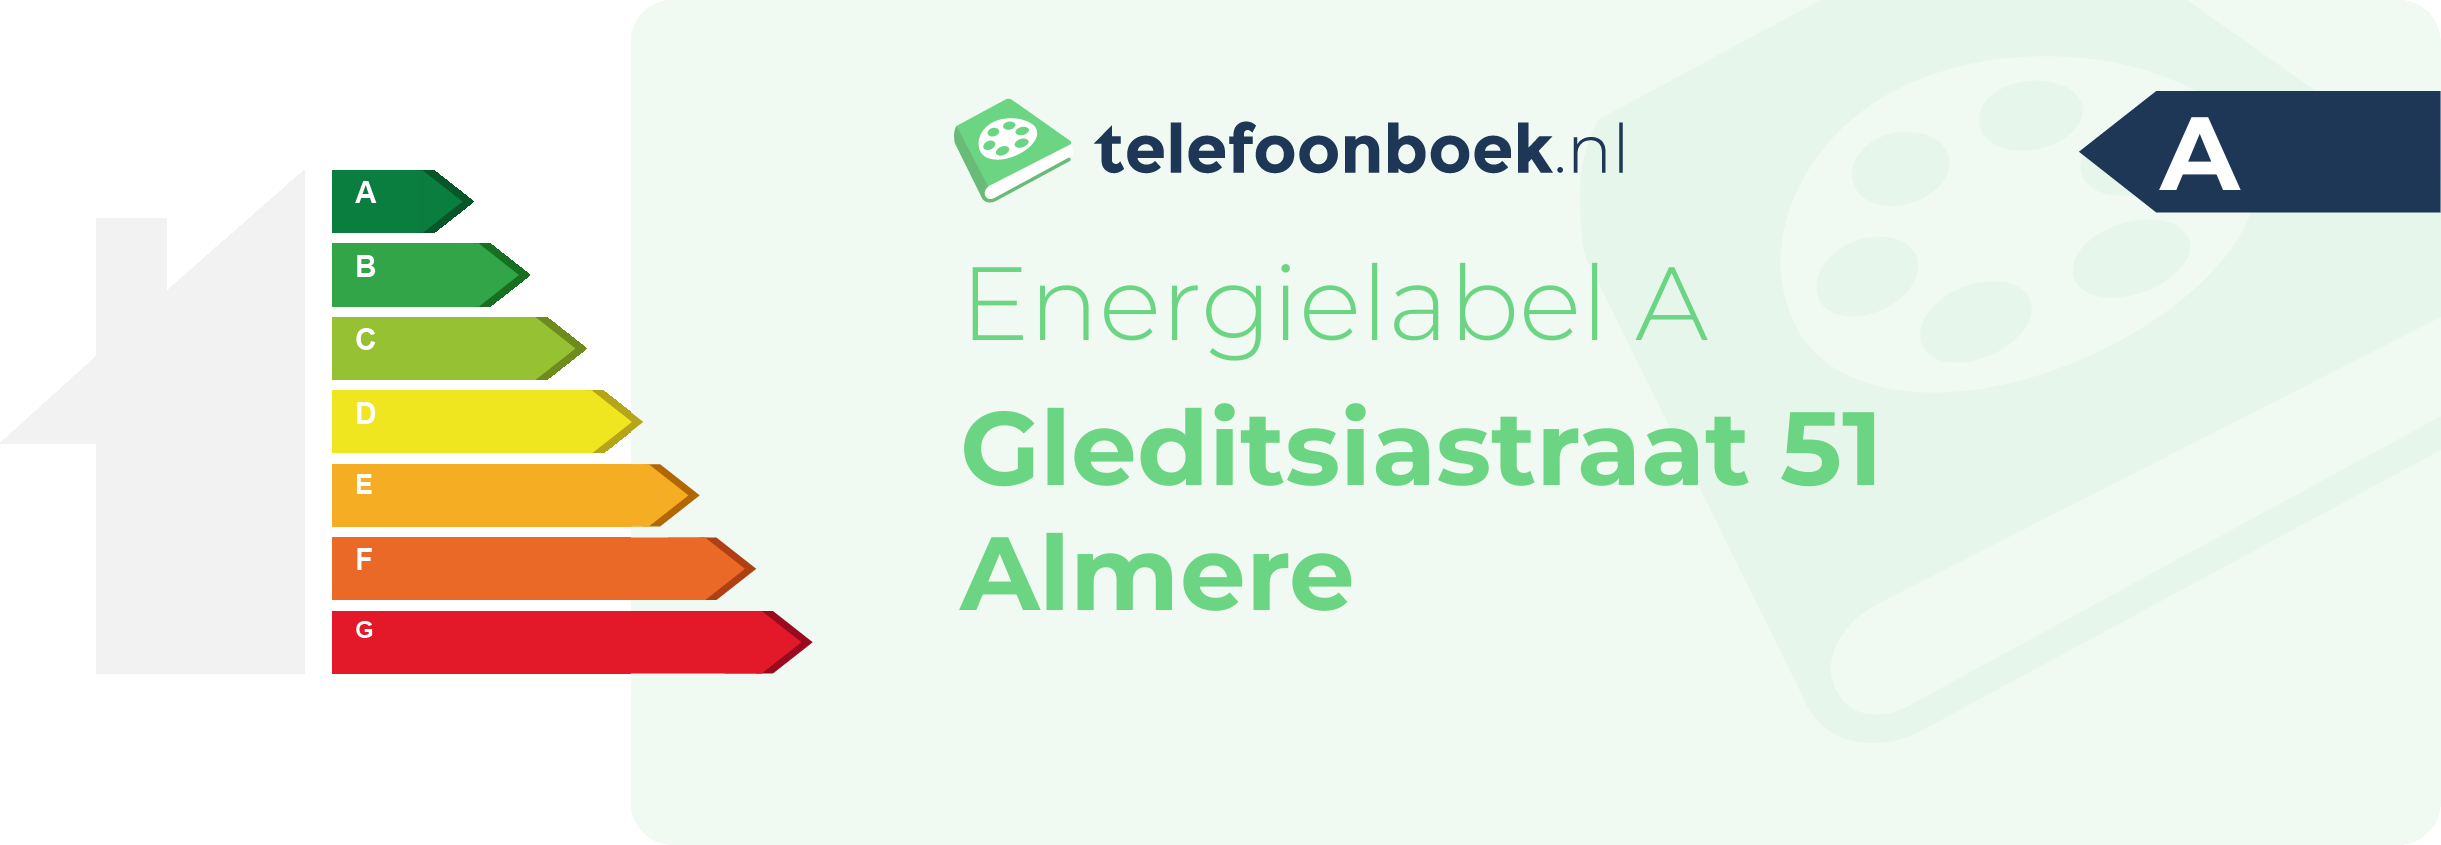 Energielabel Gleditsiastraat 51 Almere